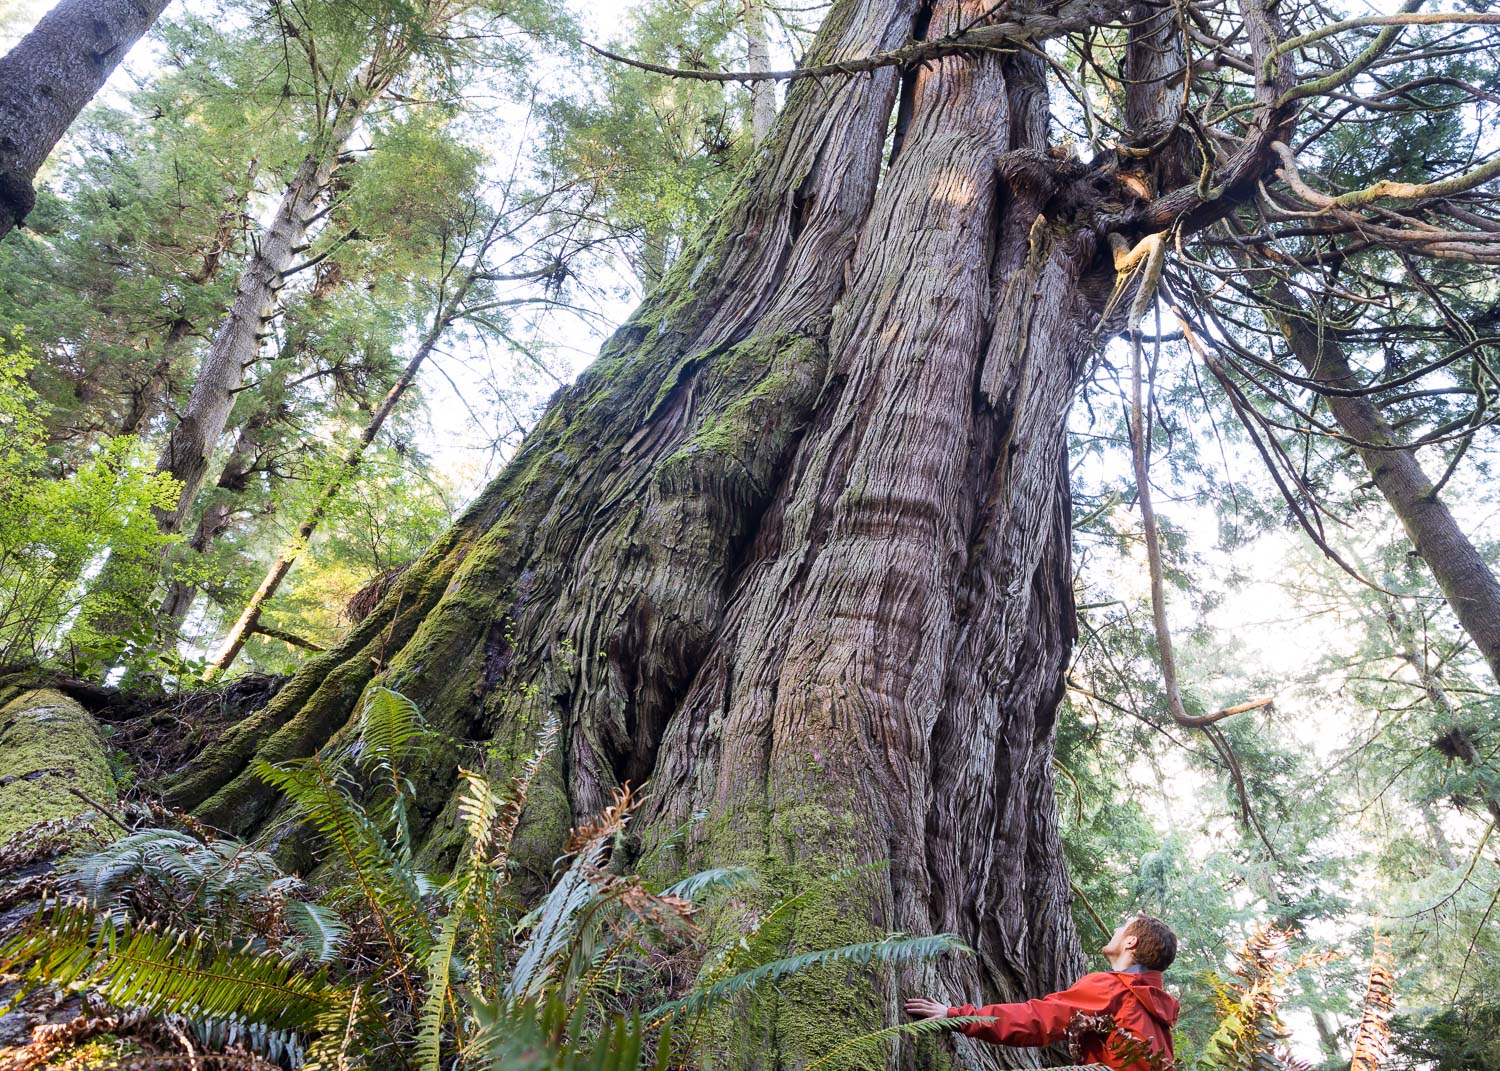 One of many massive cedars found growing in the Jurassic Grove near Port Renfrew